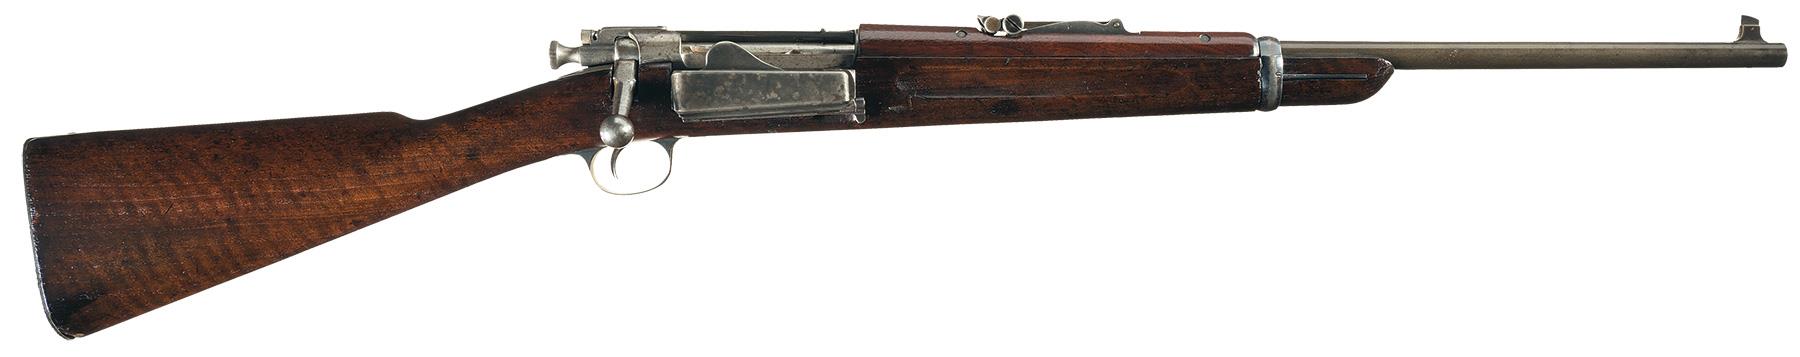 springfield 1898 forgotten weapons